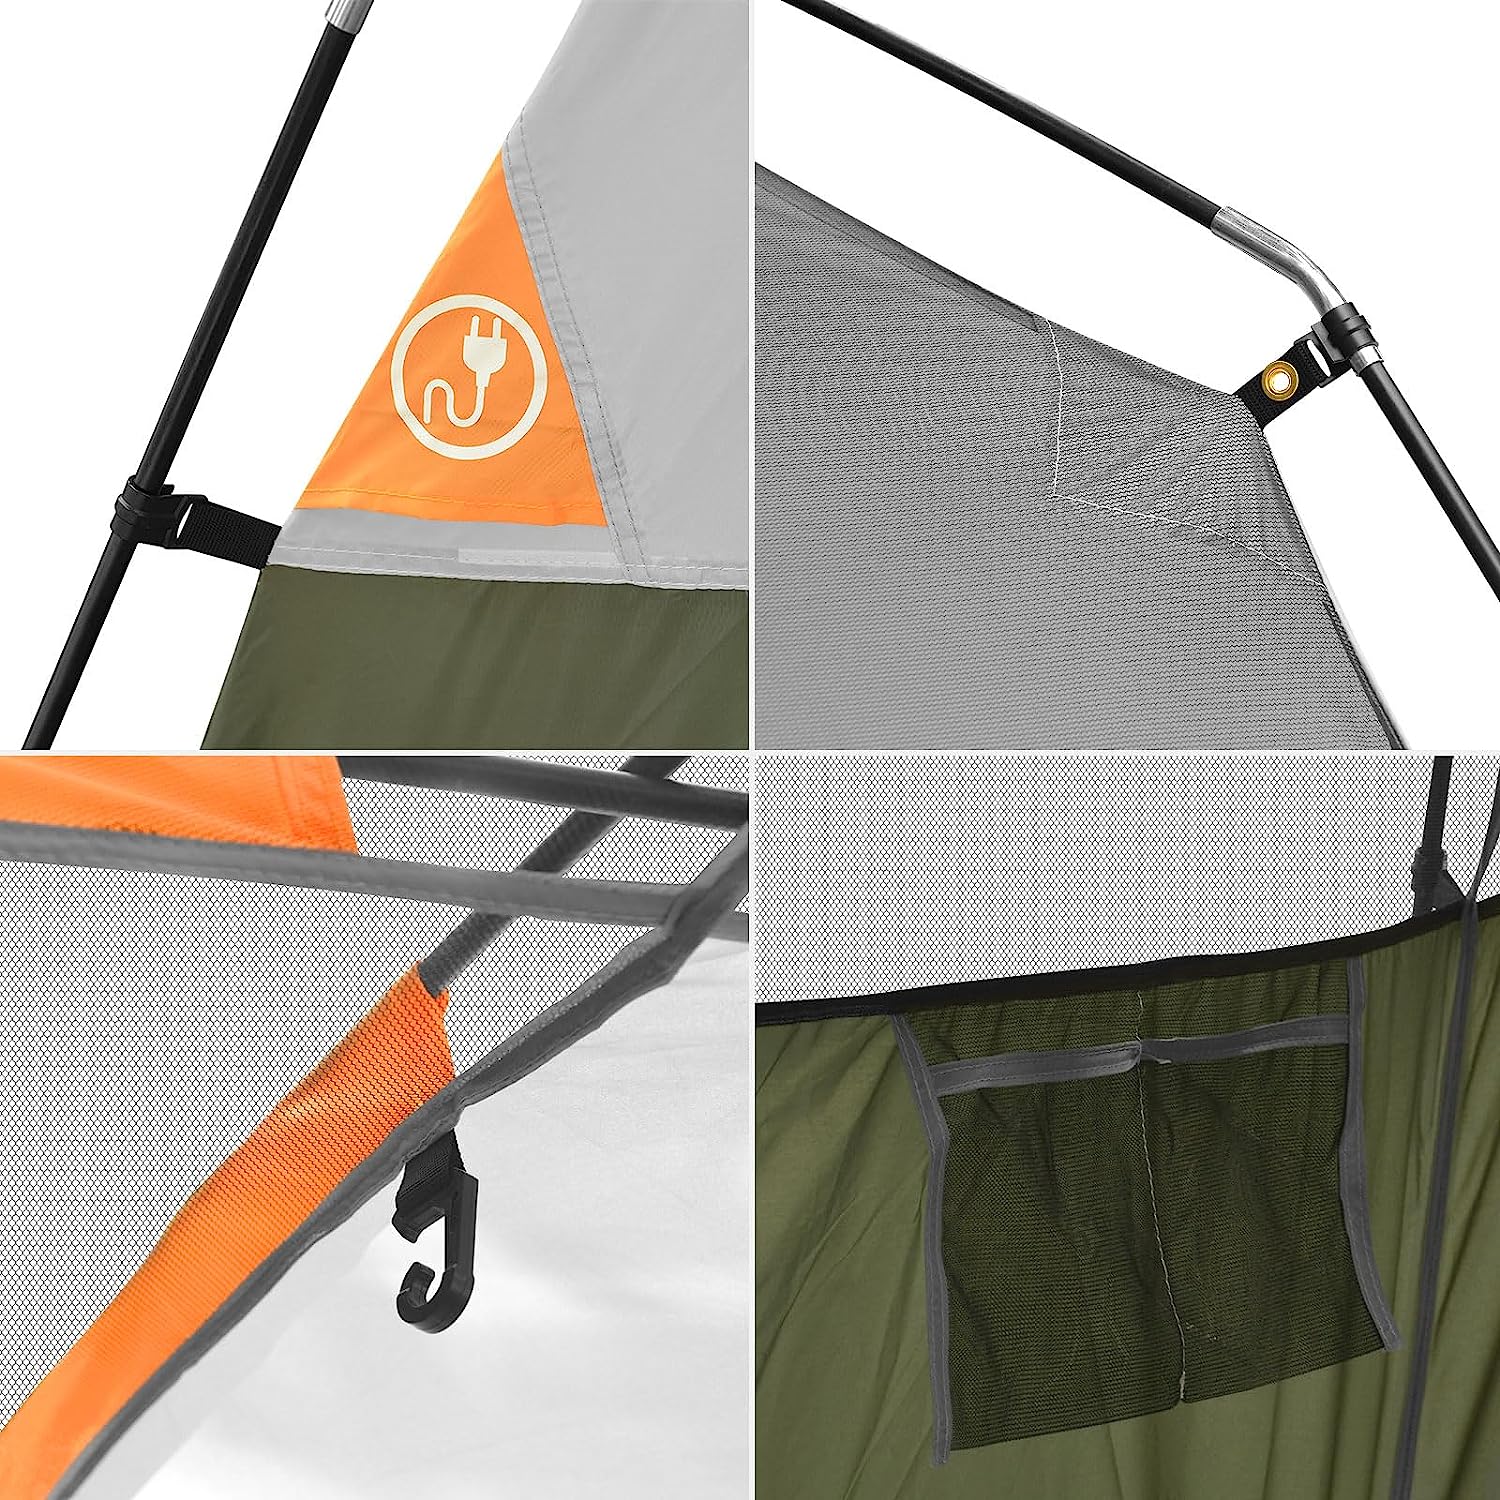 Campros Dome Tent Details